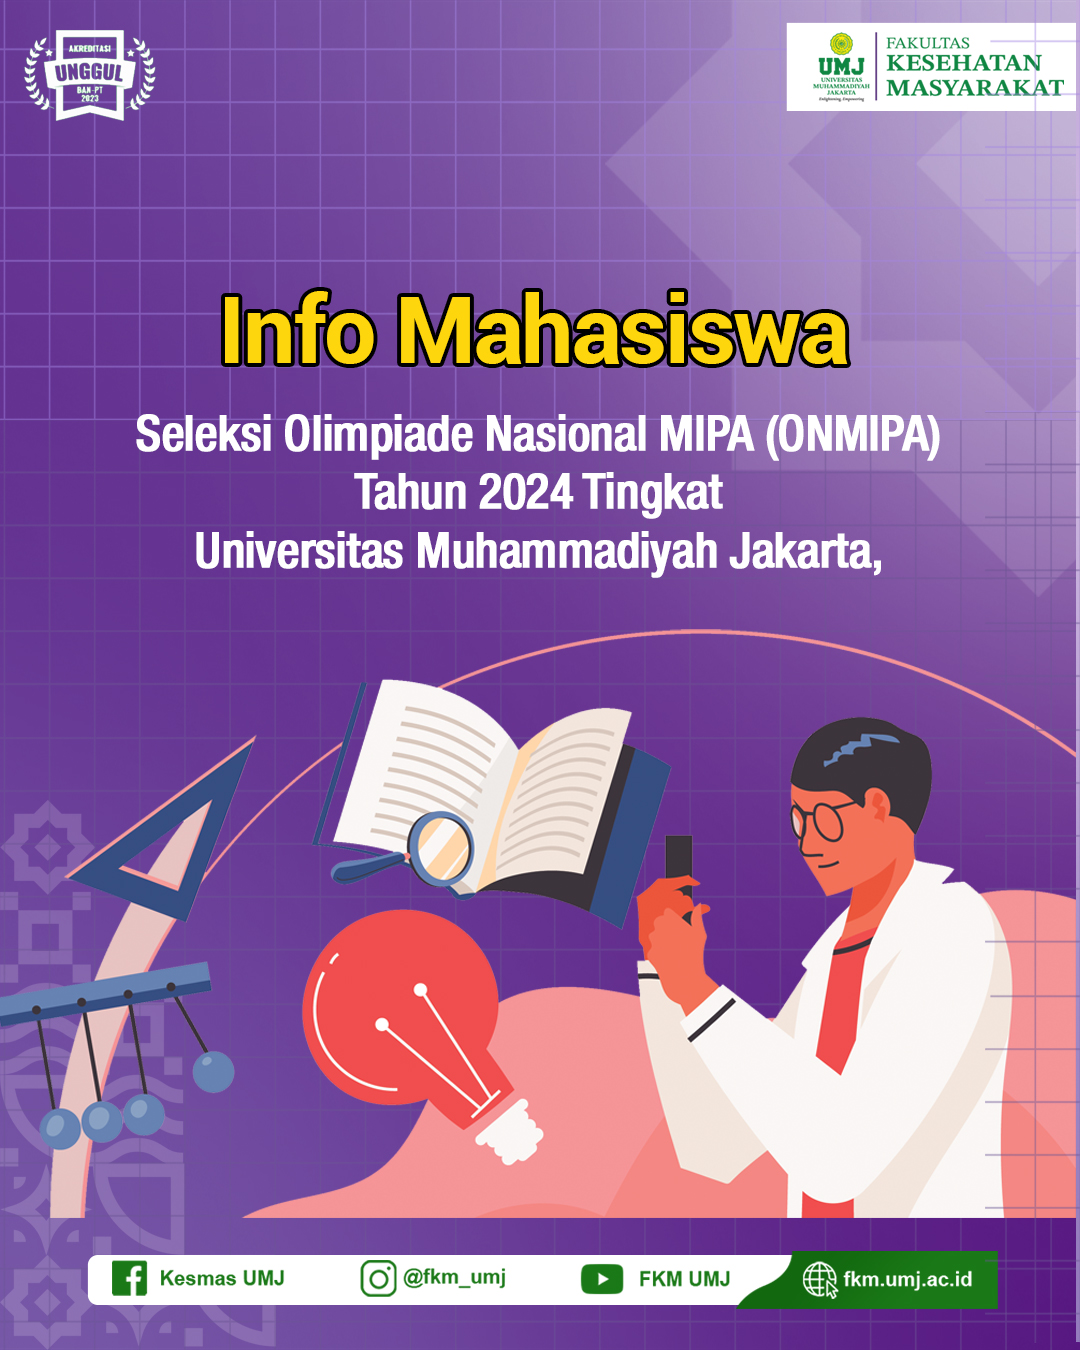 Universitas Muhammadiyah Jakarta Umumkan Timeline Seleksi ONMIPA Tahun 2024 Tingkat UMJ (PT)